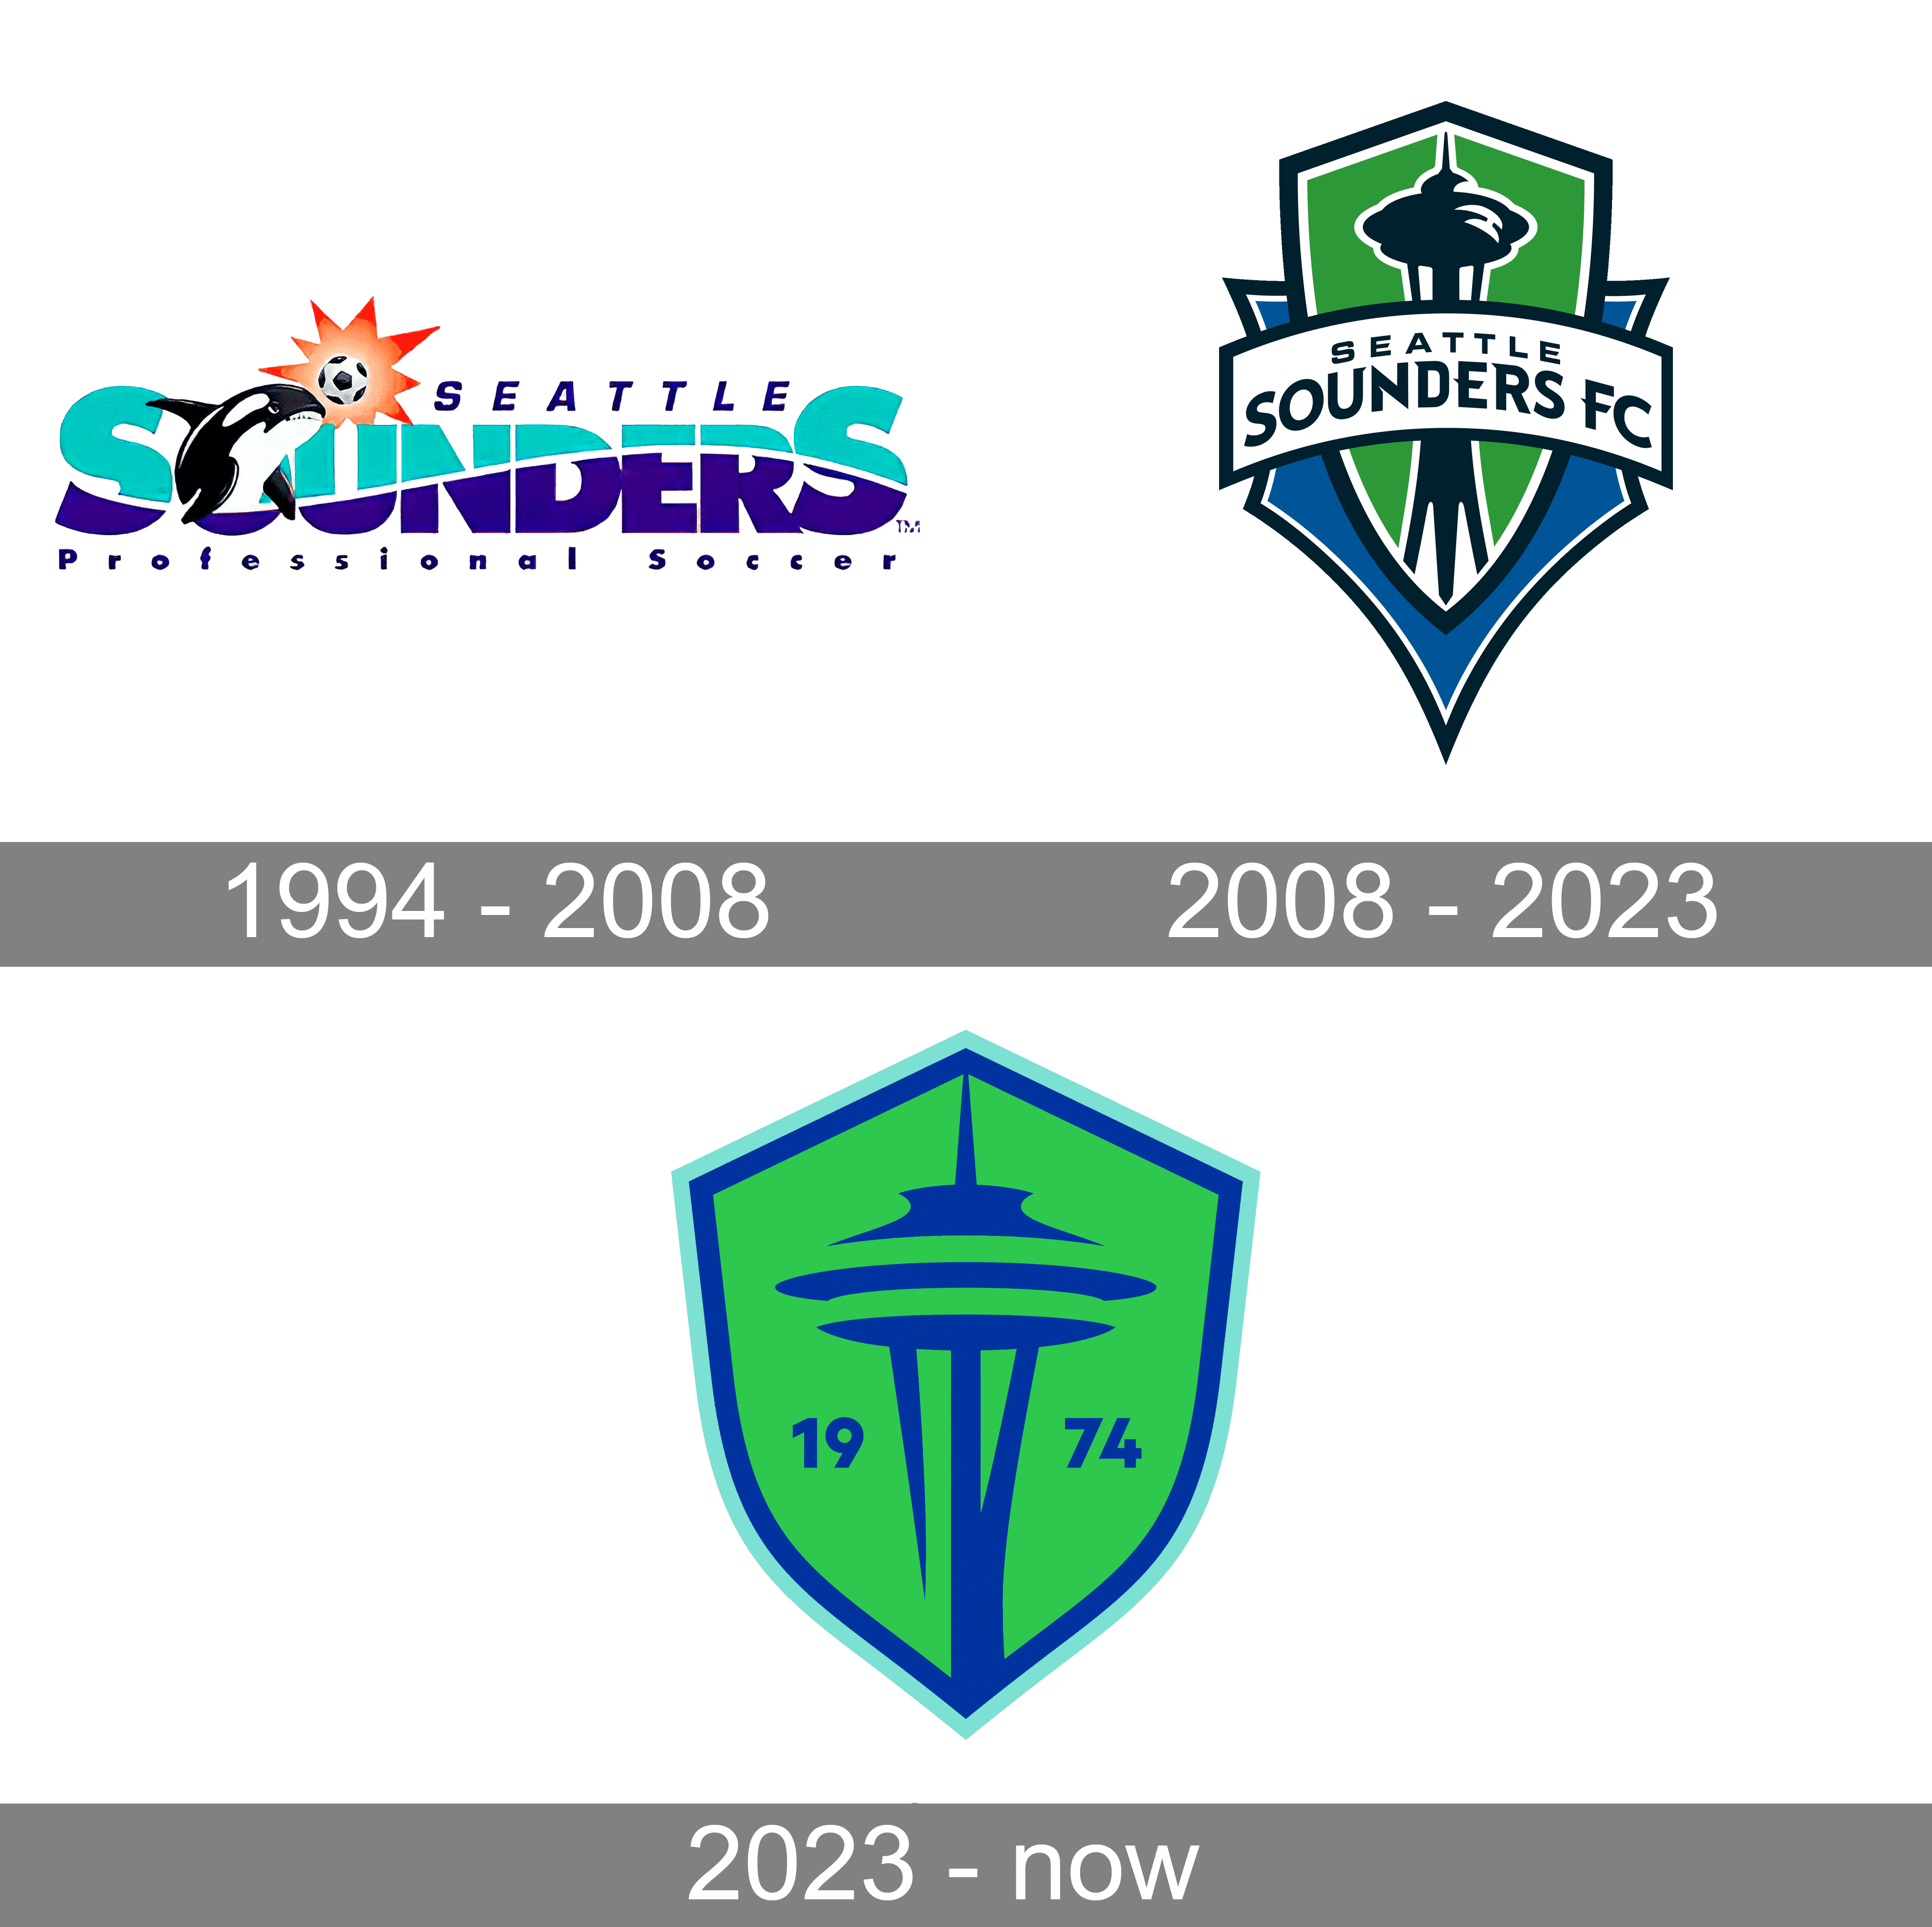 File:MLS crest logo RGB - Seattle Sounders FC.svg - Wikipedia